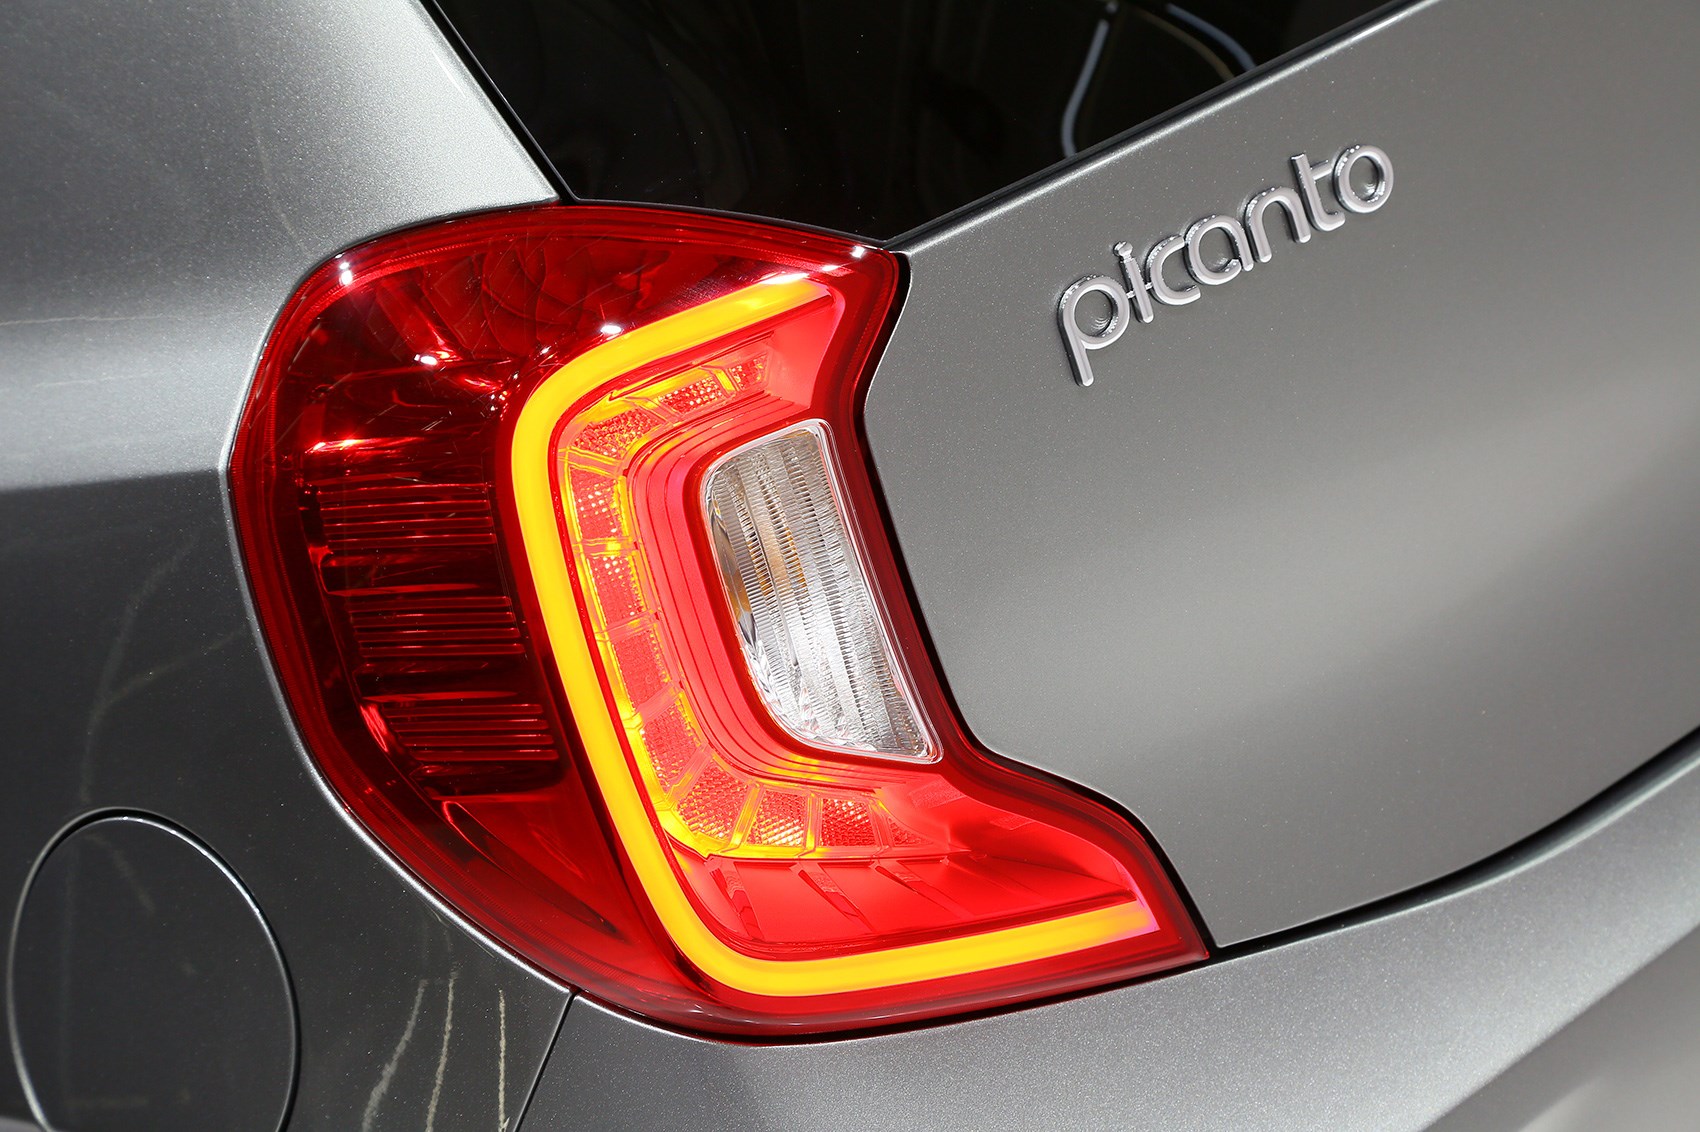 Kia Picanto v3.0: meet Korea's slickest city car | CAR